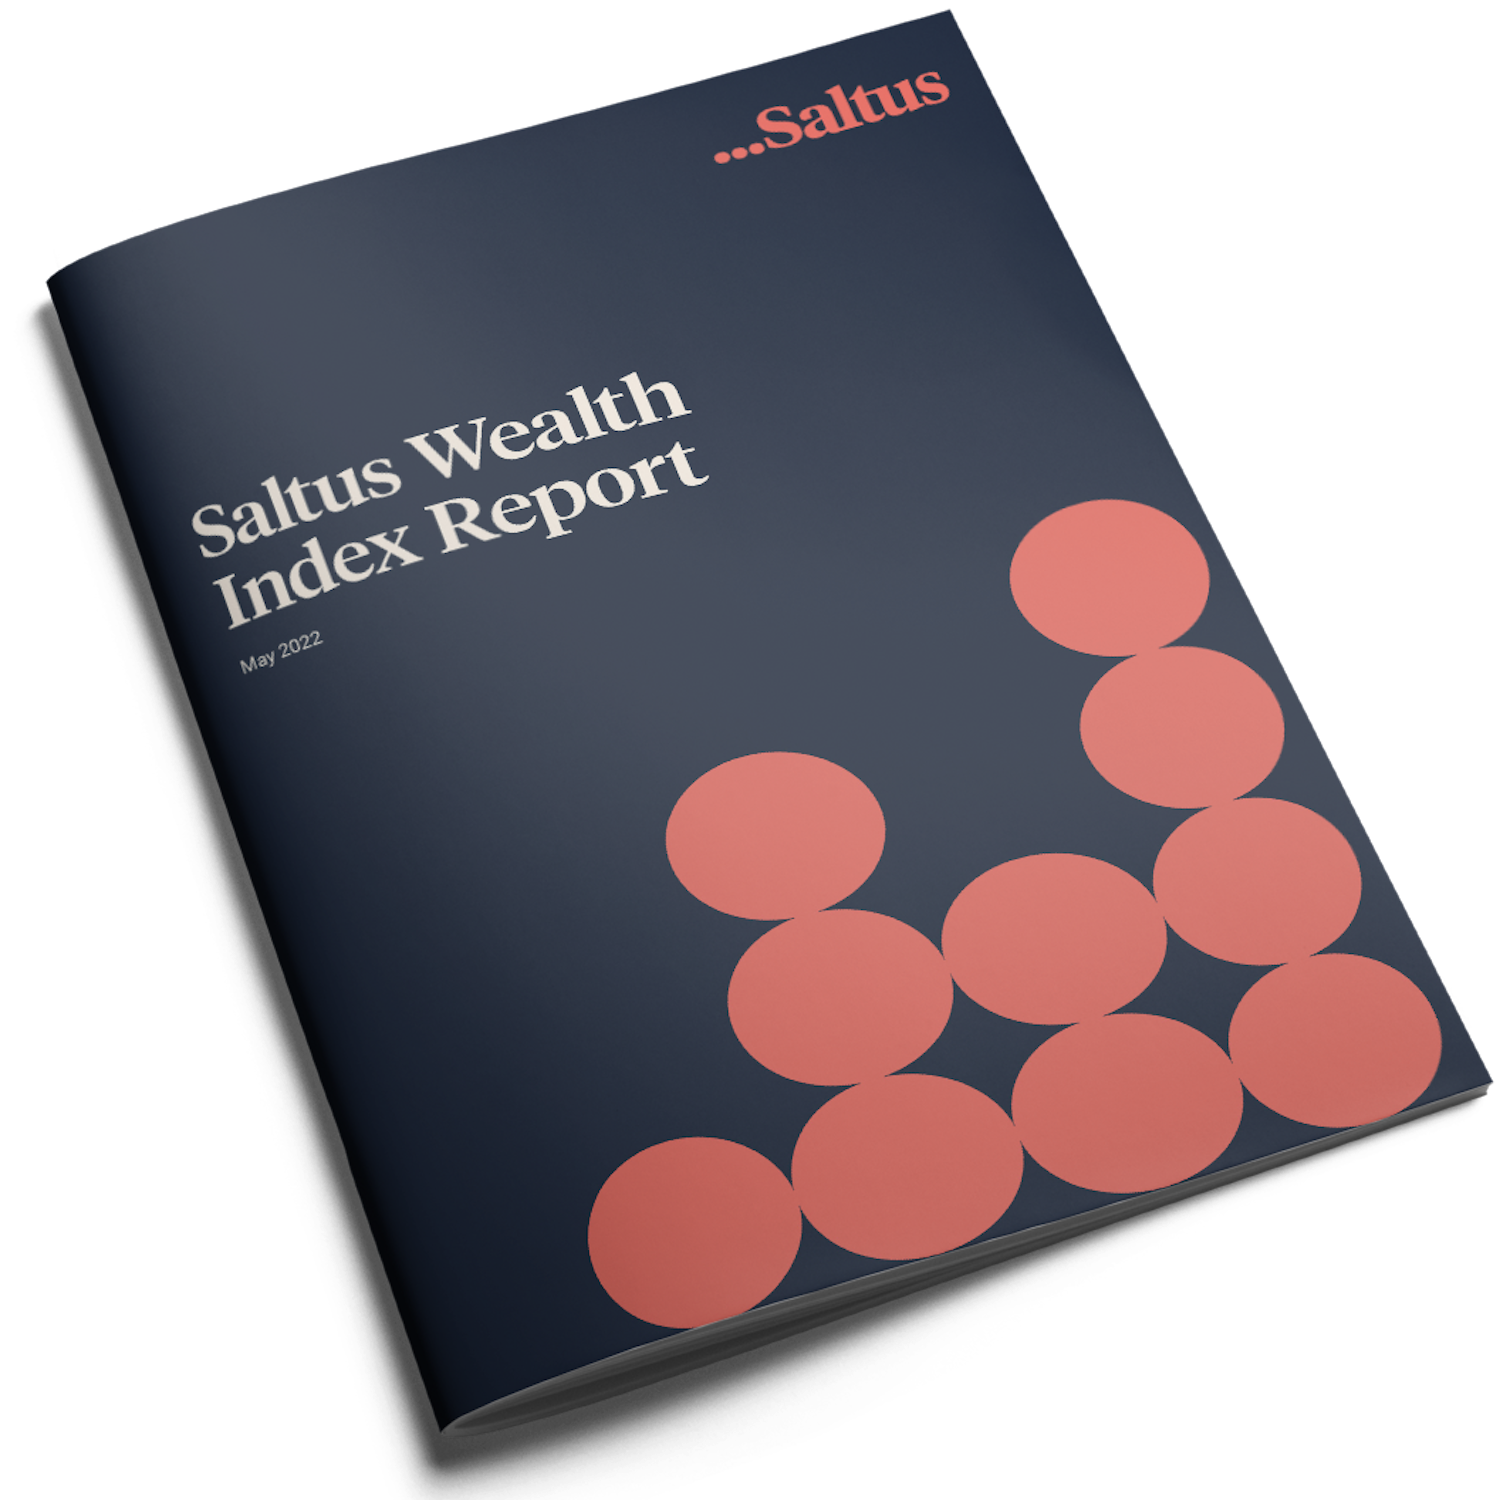 Saltus Wealth Index Report cover May 2022